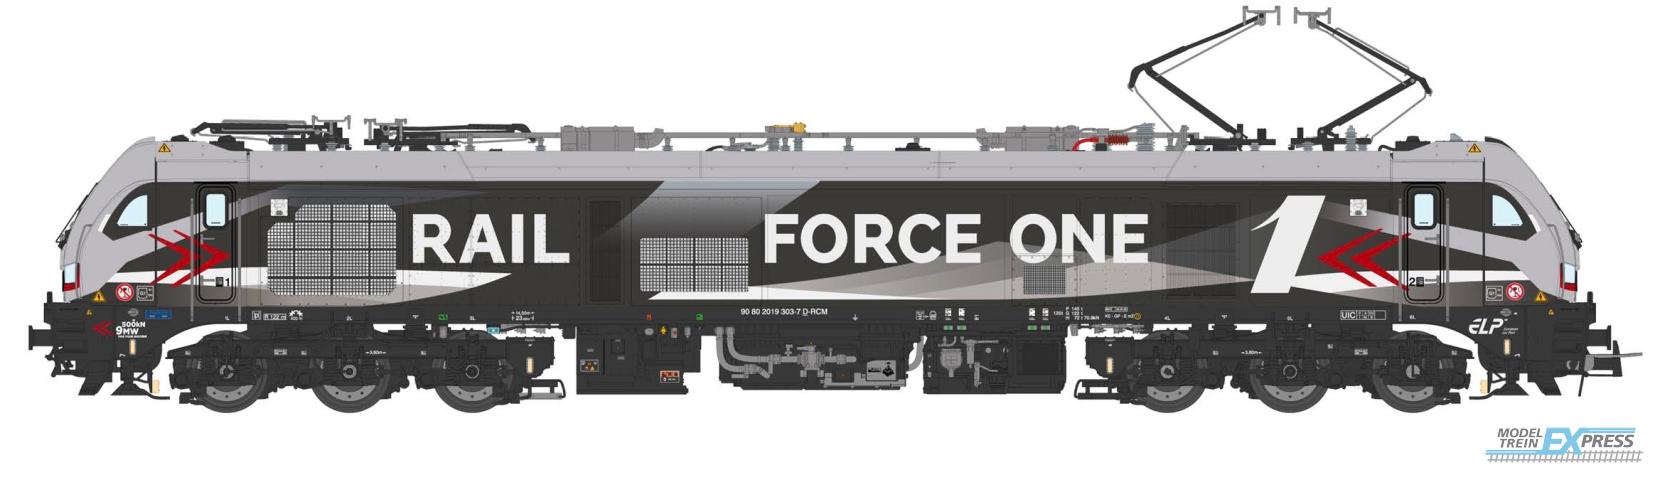 Sudexpress S0193039 Euro 9000 locomotive 2019 303-7 Rail Force One, AC Digital